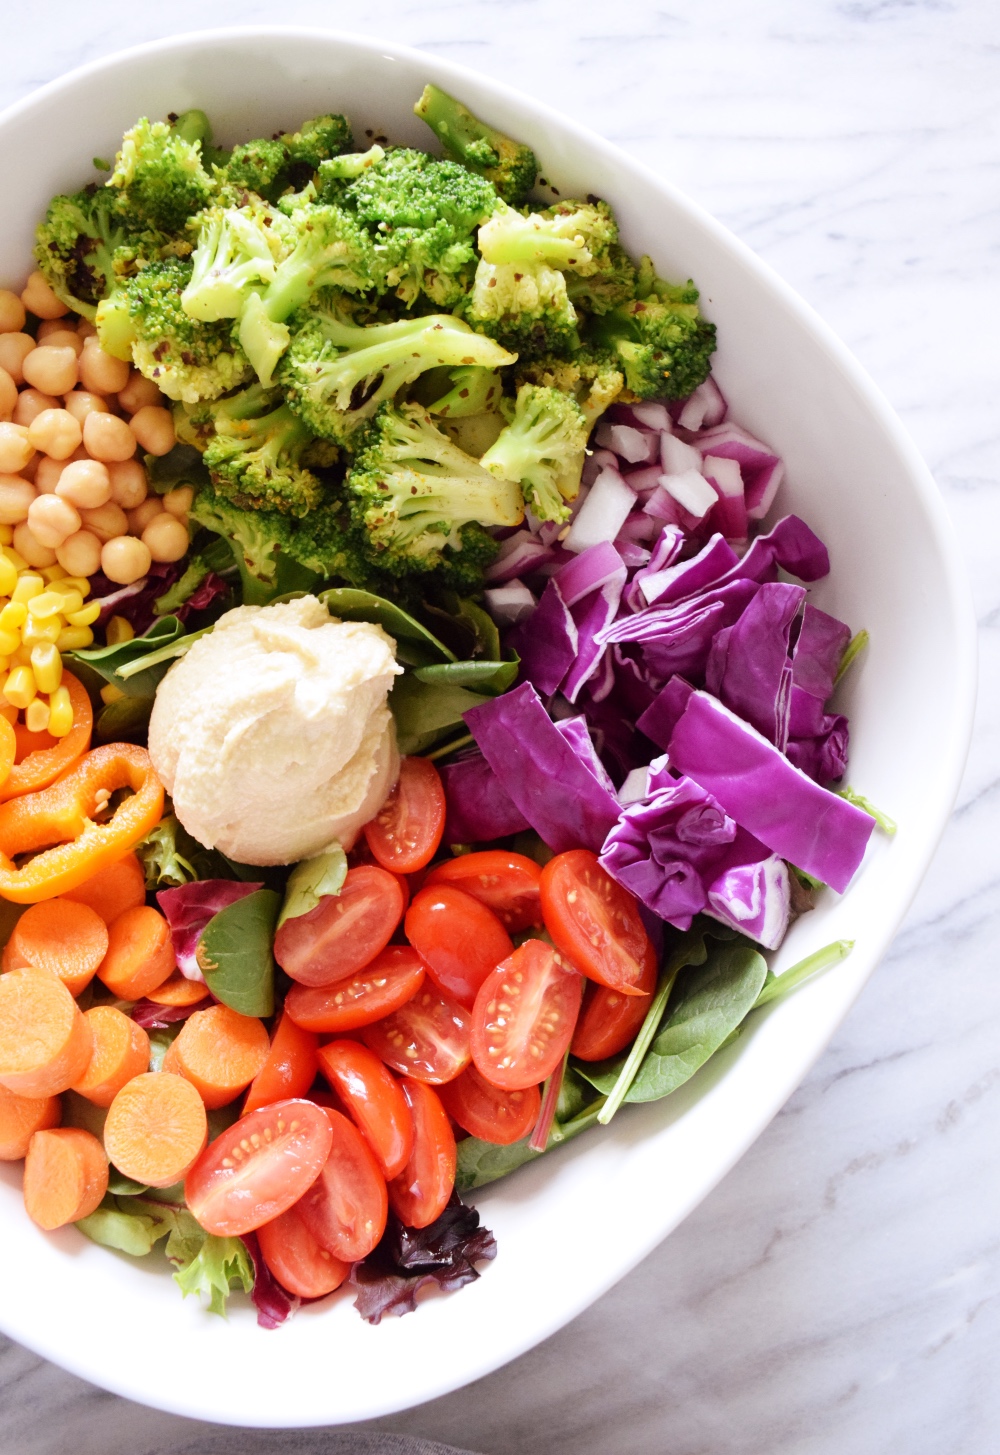 https://sweetvegansara.com/wp-content/uploads/2019/01/Vegan-Rainbow-Salad-2.jpg